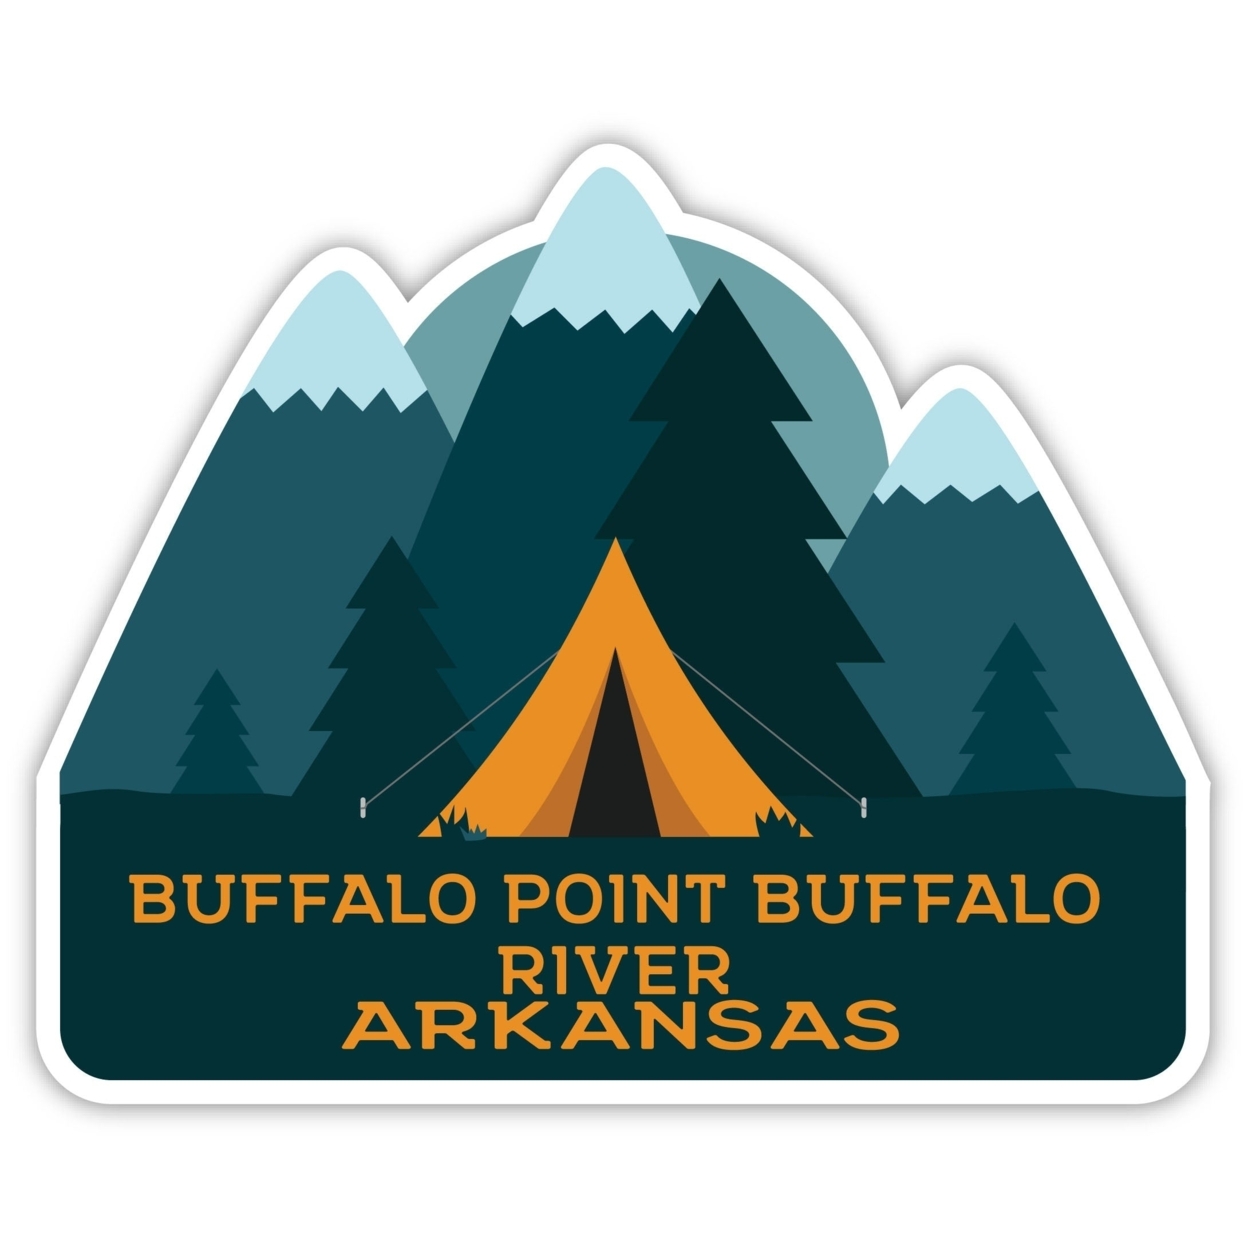 Buffalo Point Buffalo River Arkansas Souvenir Decorative Stickers (Choose Theme And Size) - 4-Pack, 4-Inch, Camp Life